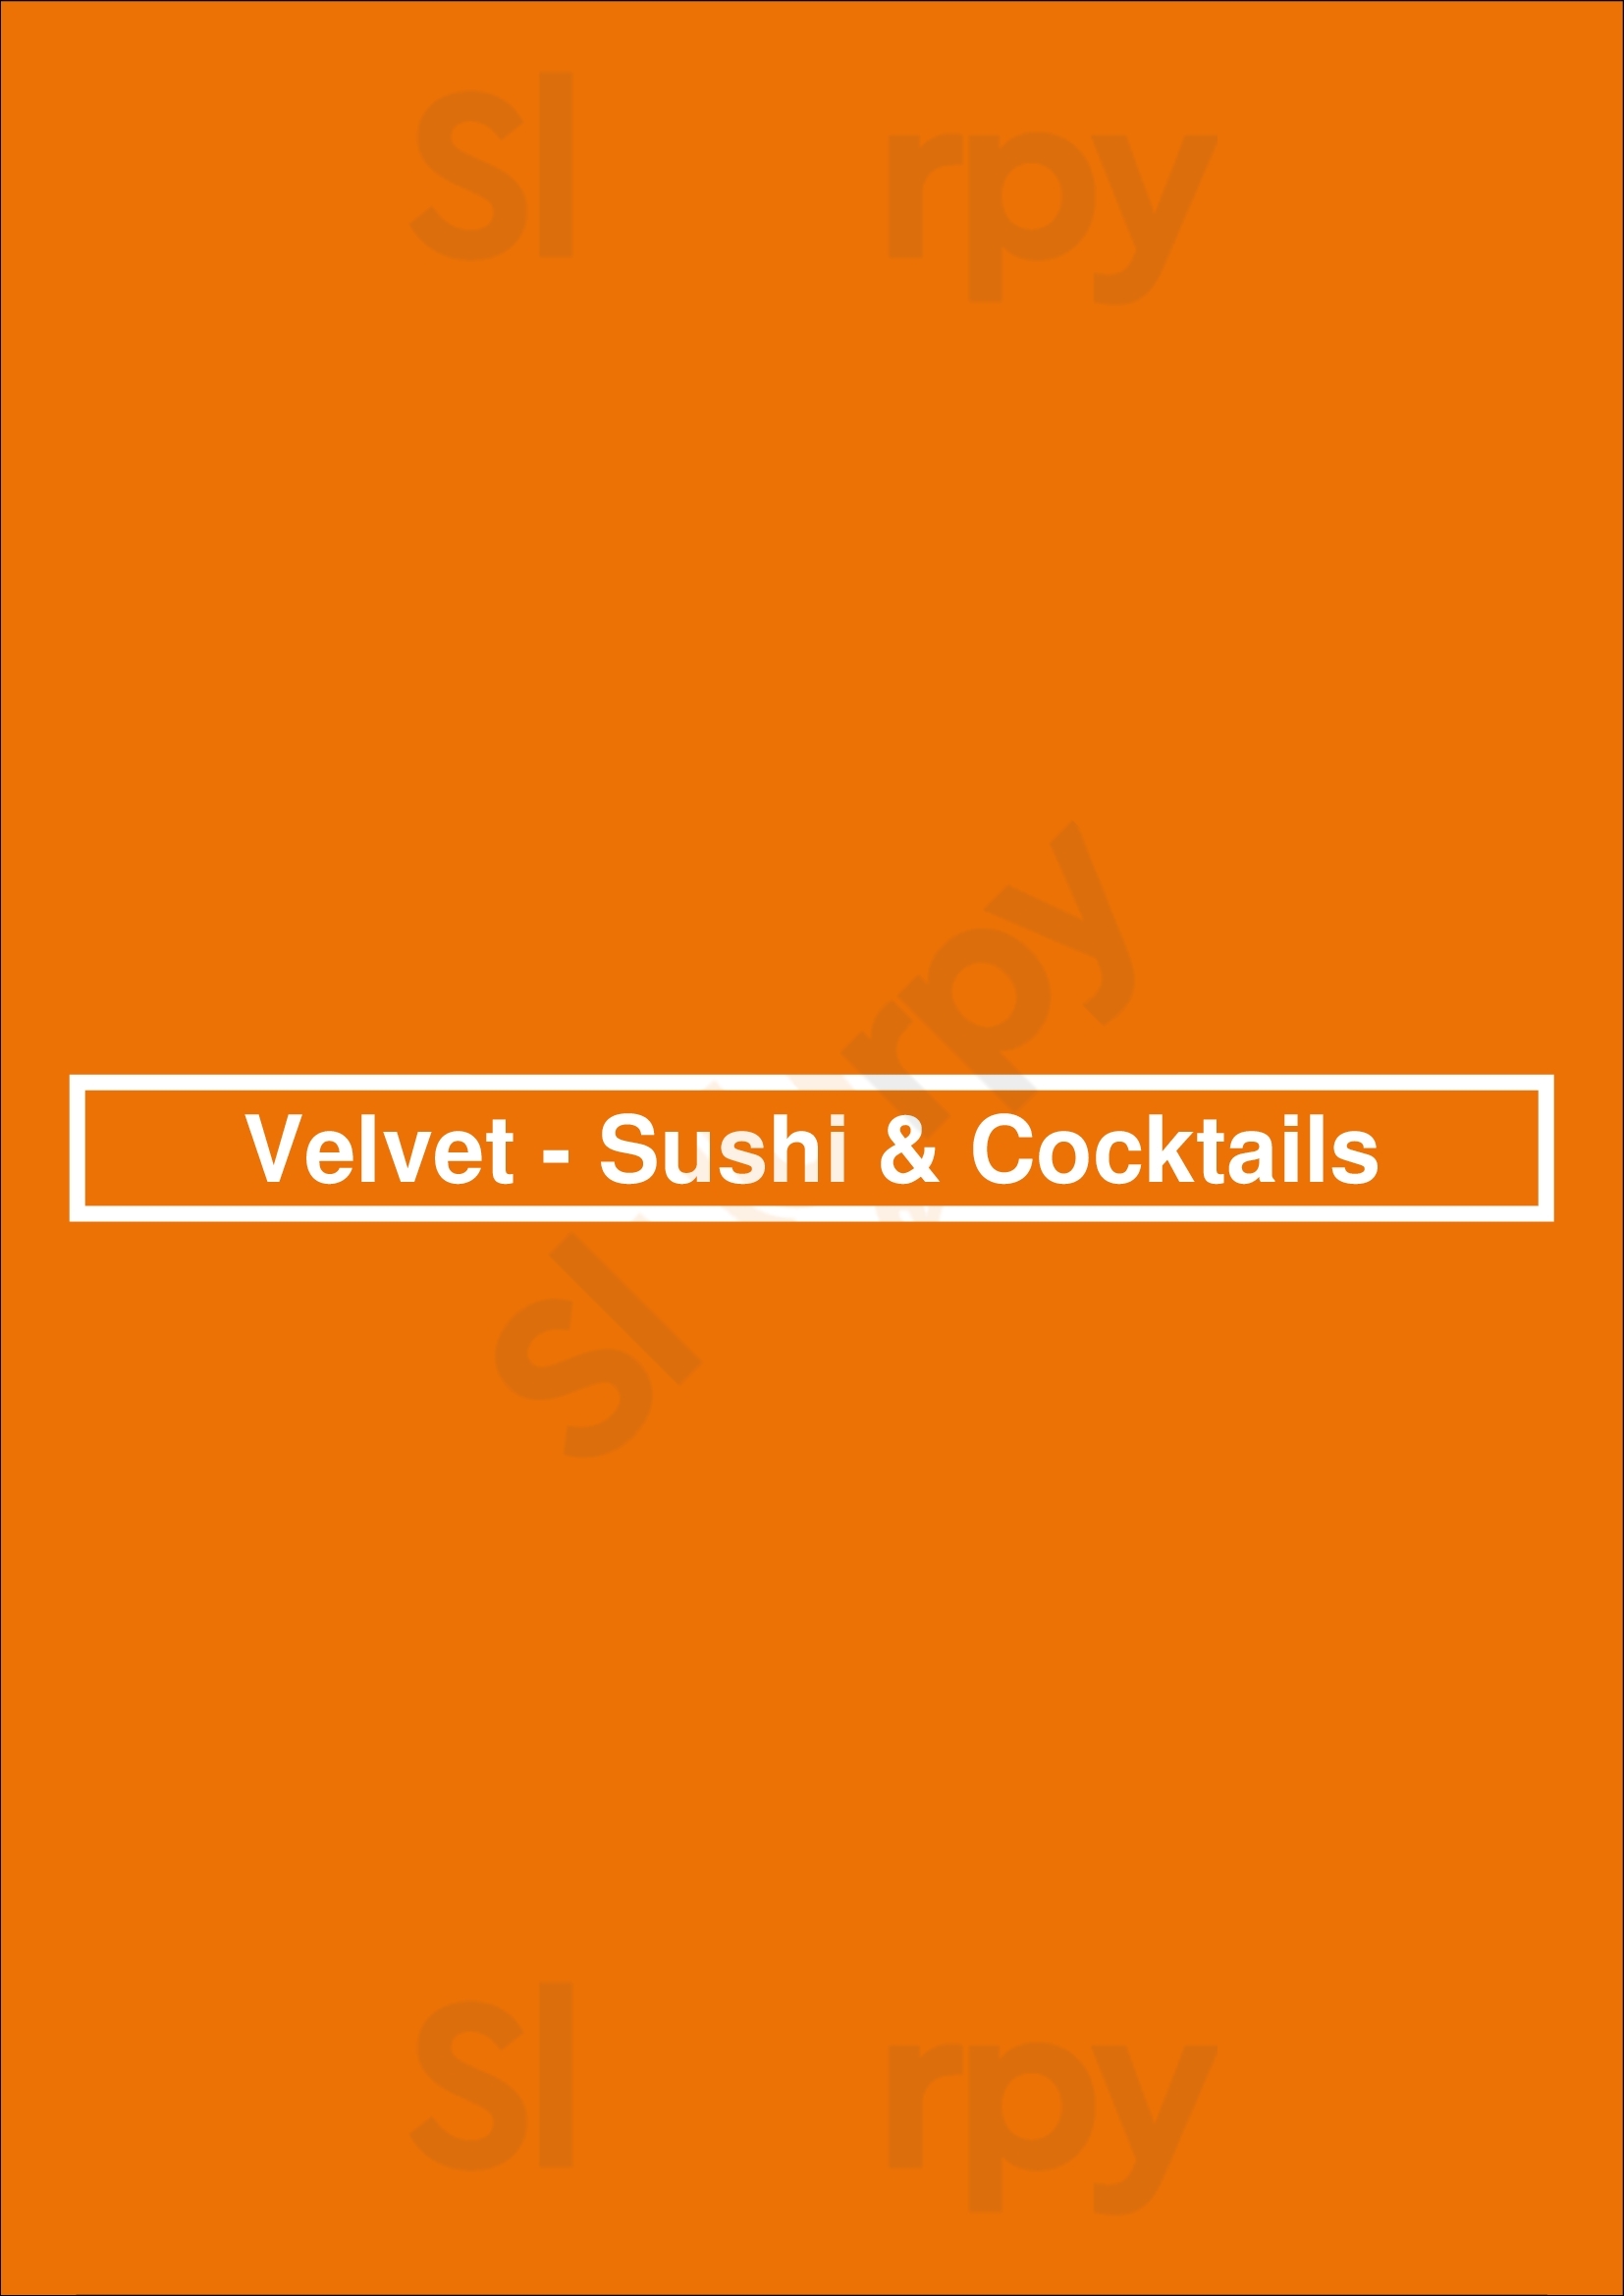 Velvet - Sushi & Cocktails Póvoa de Varzim Menu - 1